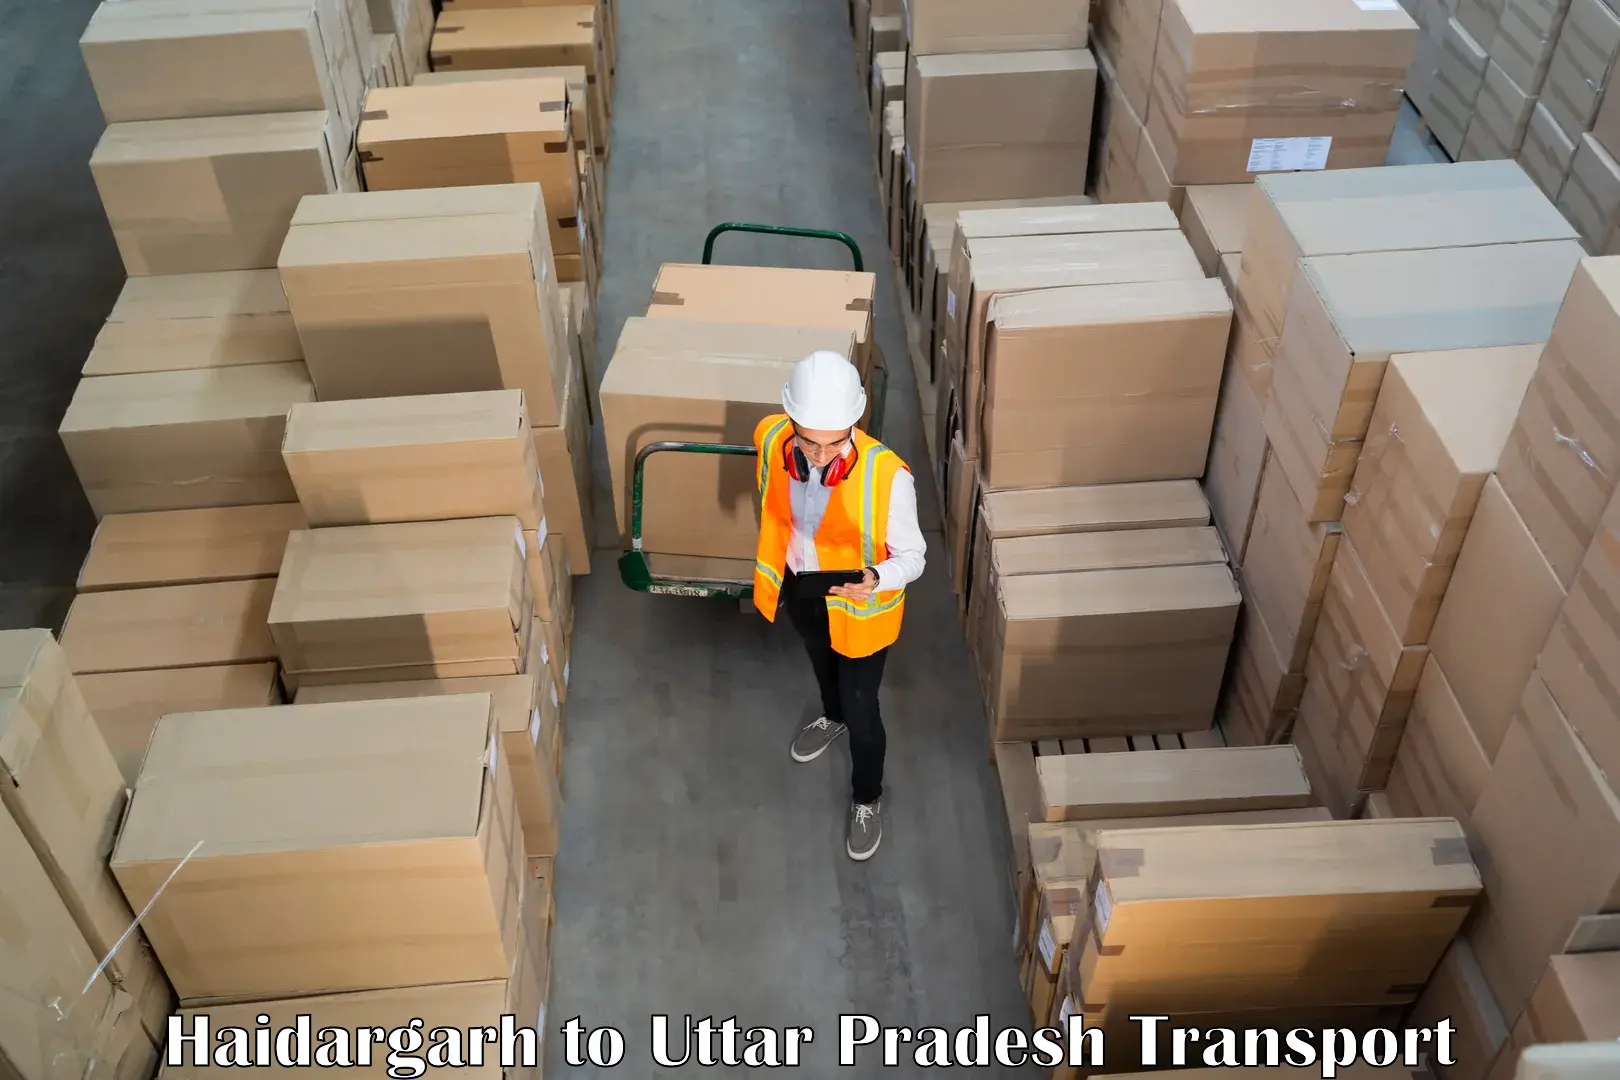 Lorry transport service Haidargarh to Barabanki